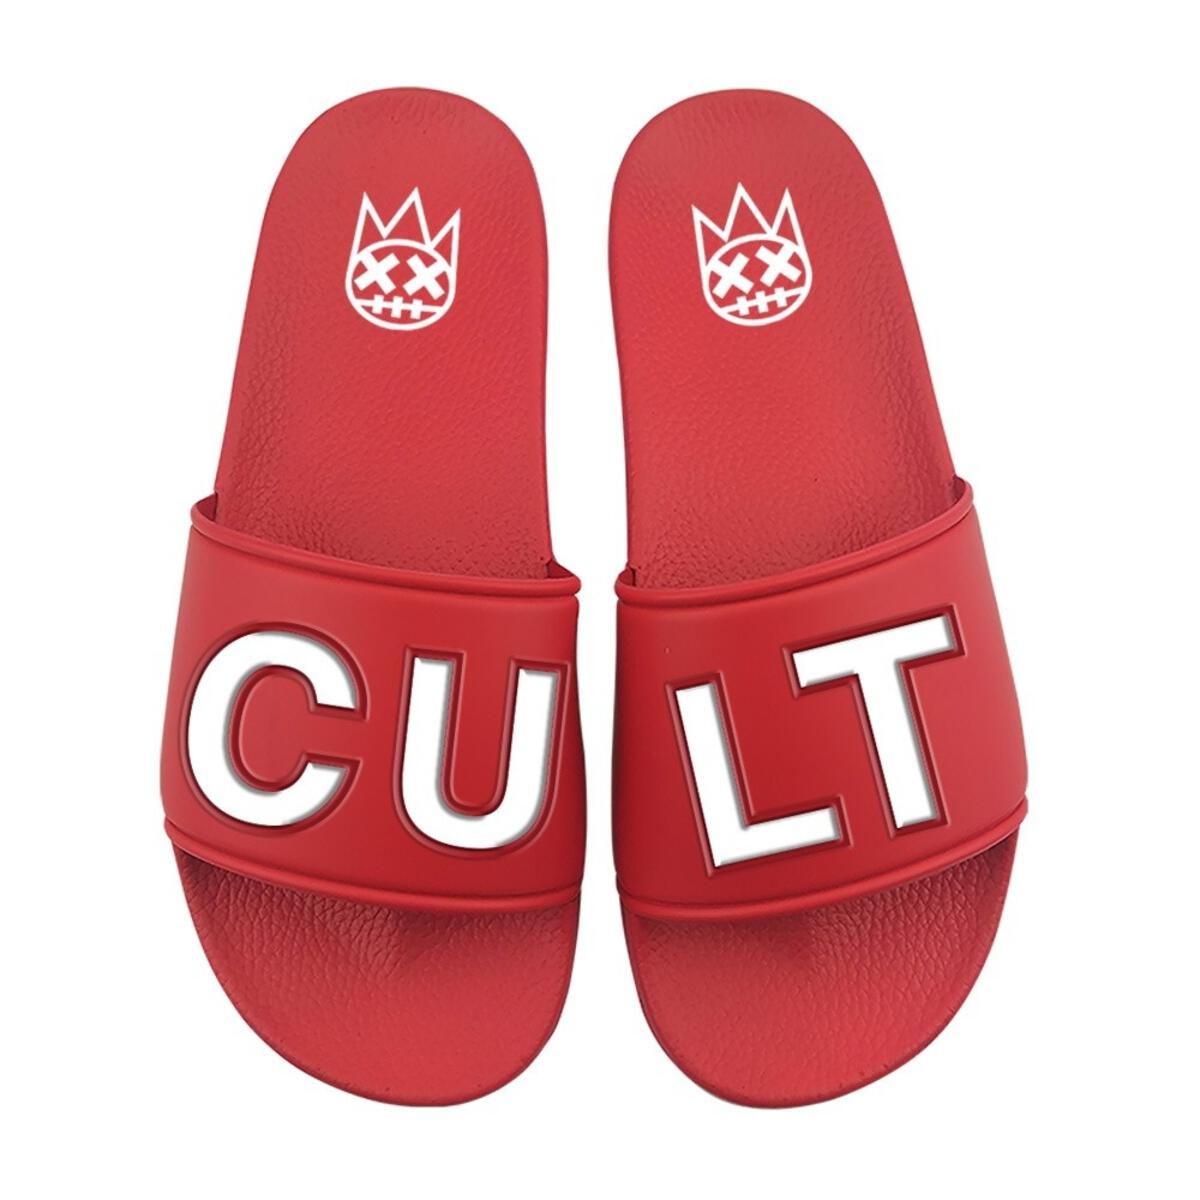 Cult Sandals W/BlackSocks-Red